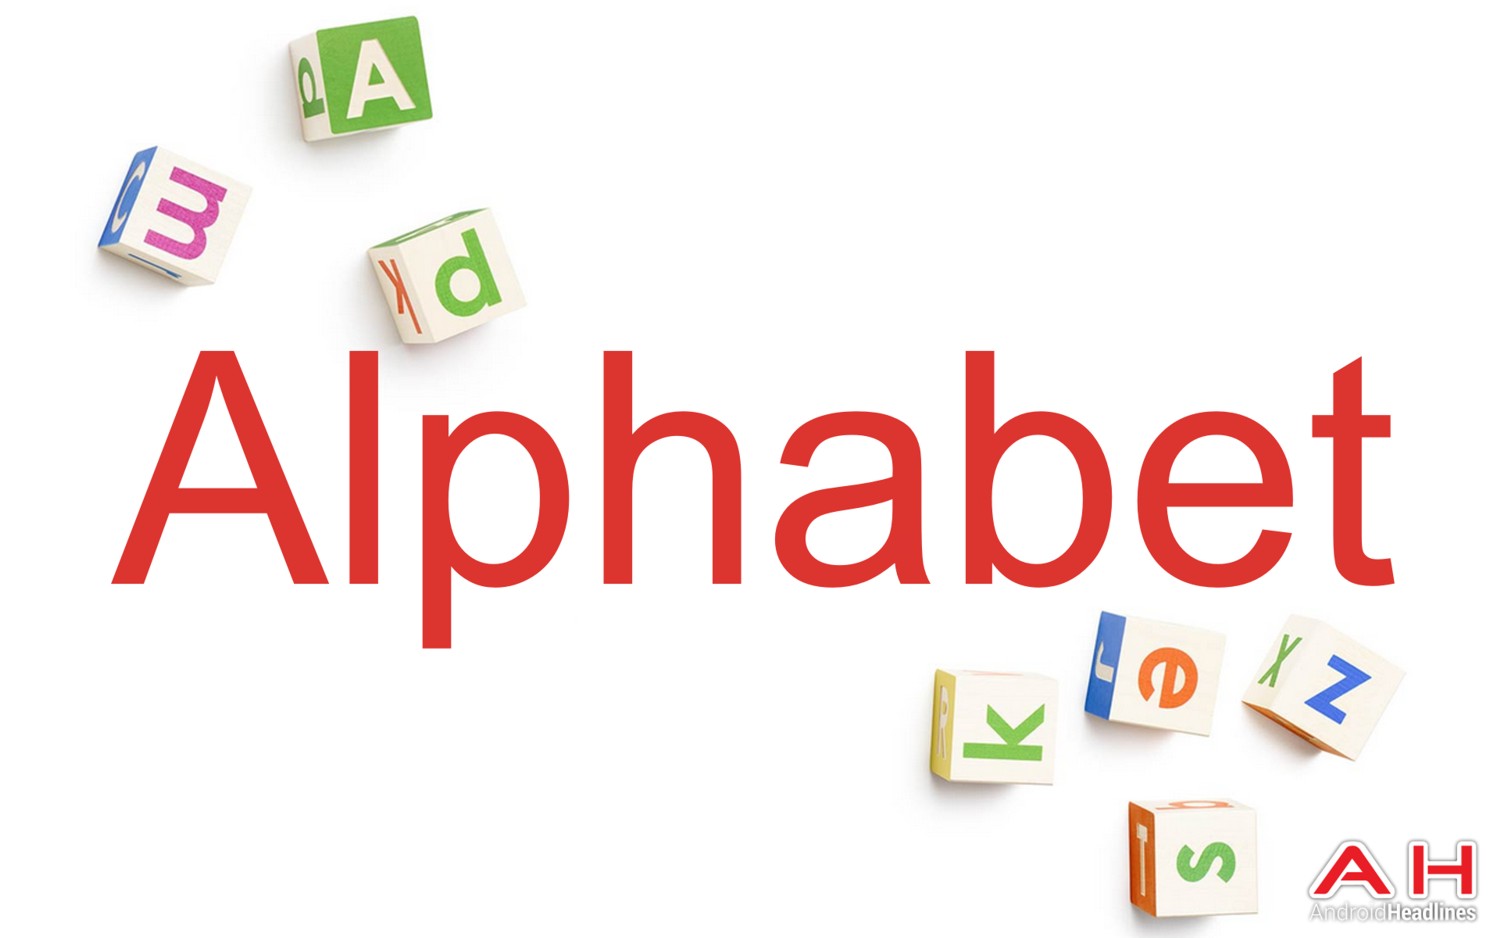 Is Google (Alphabet) becoming